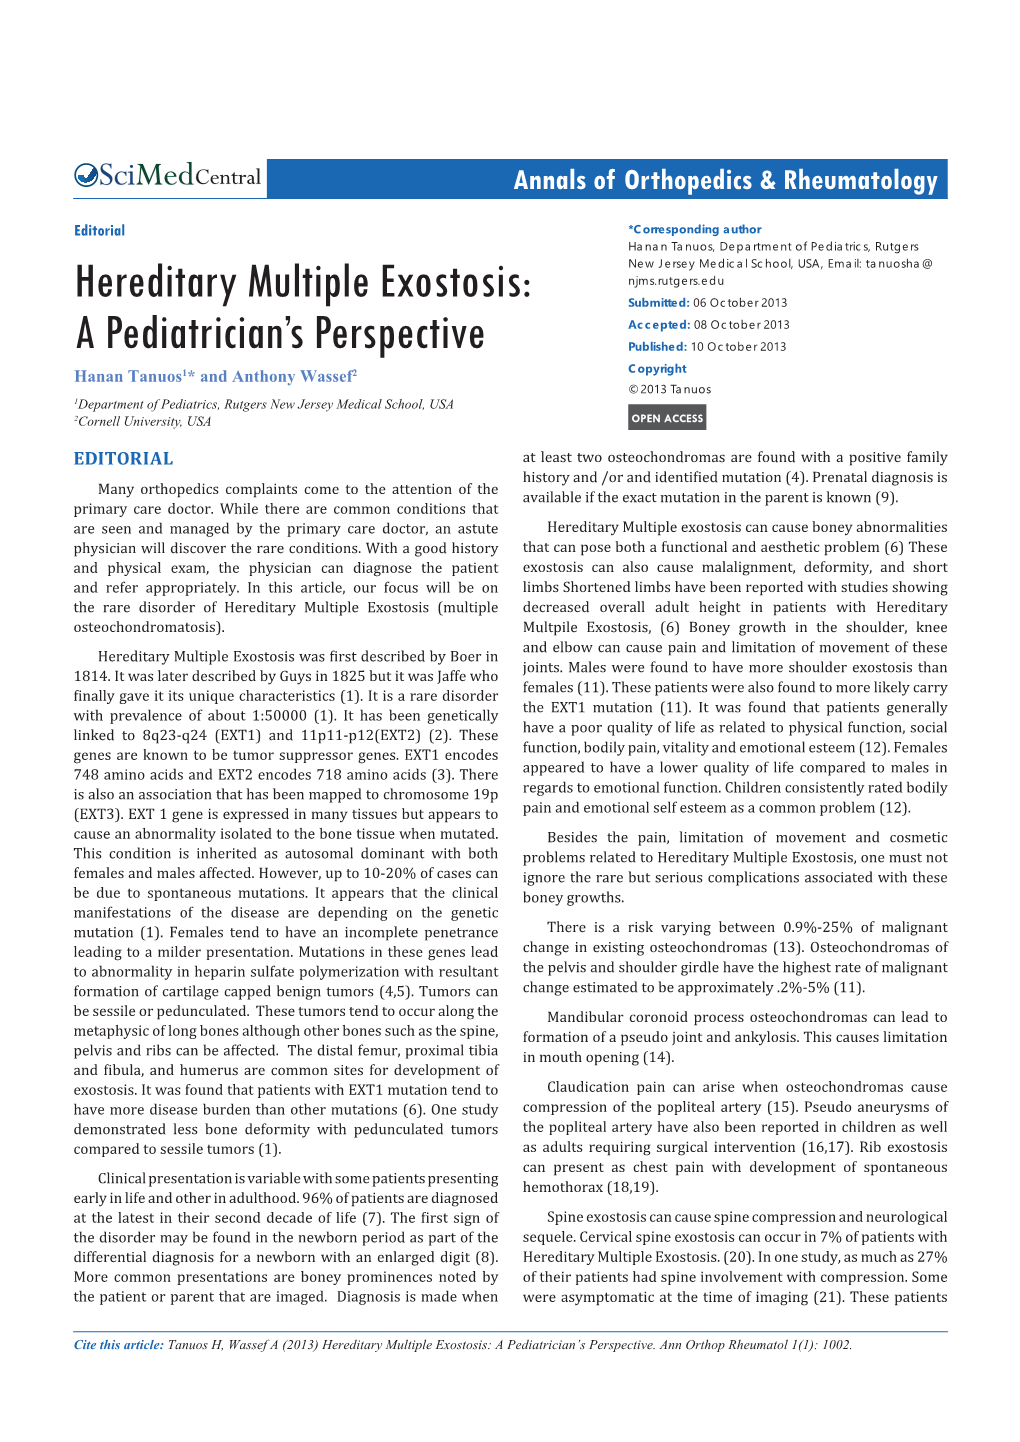 Hereditary Multiple Exostosis